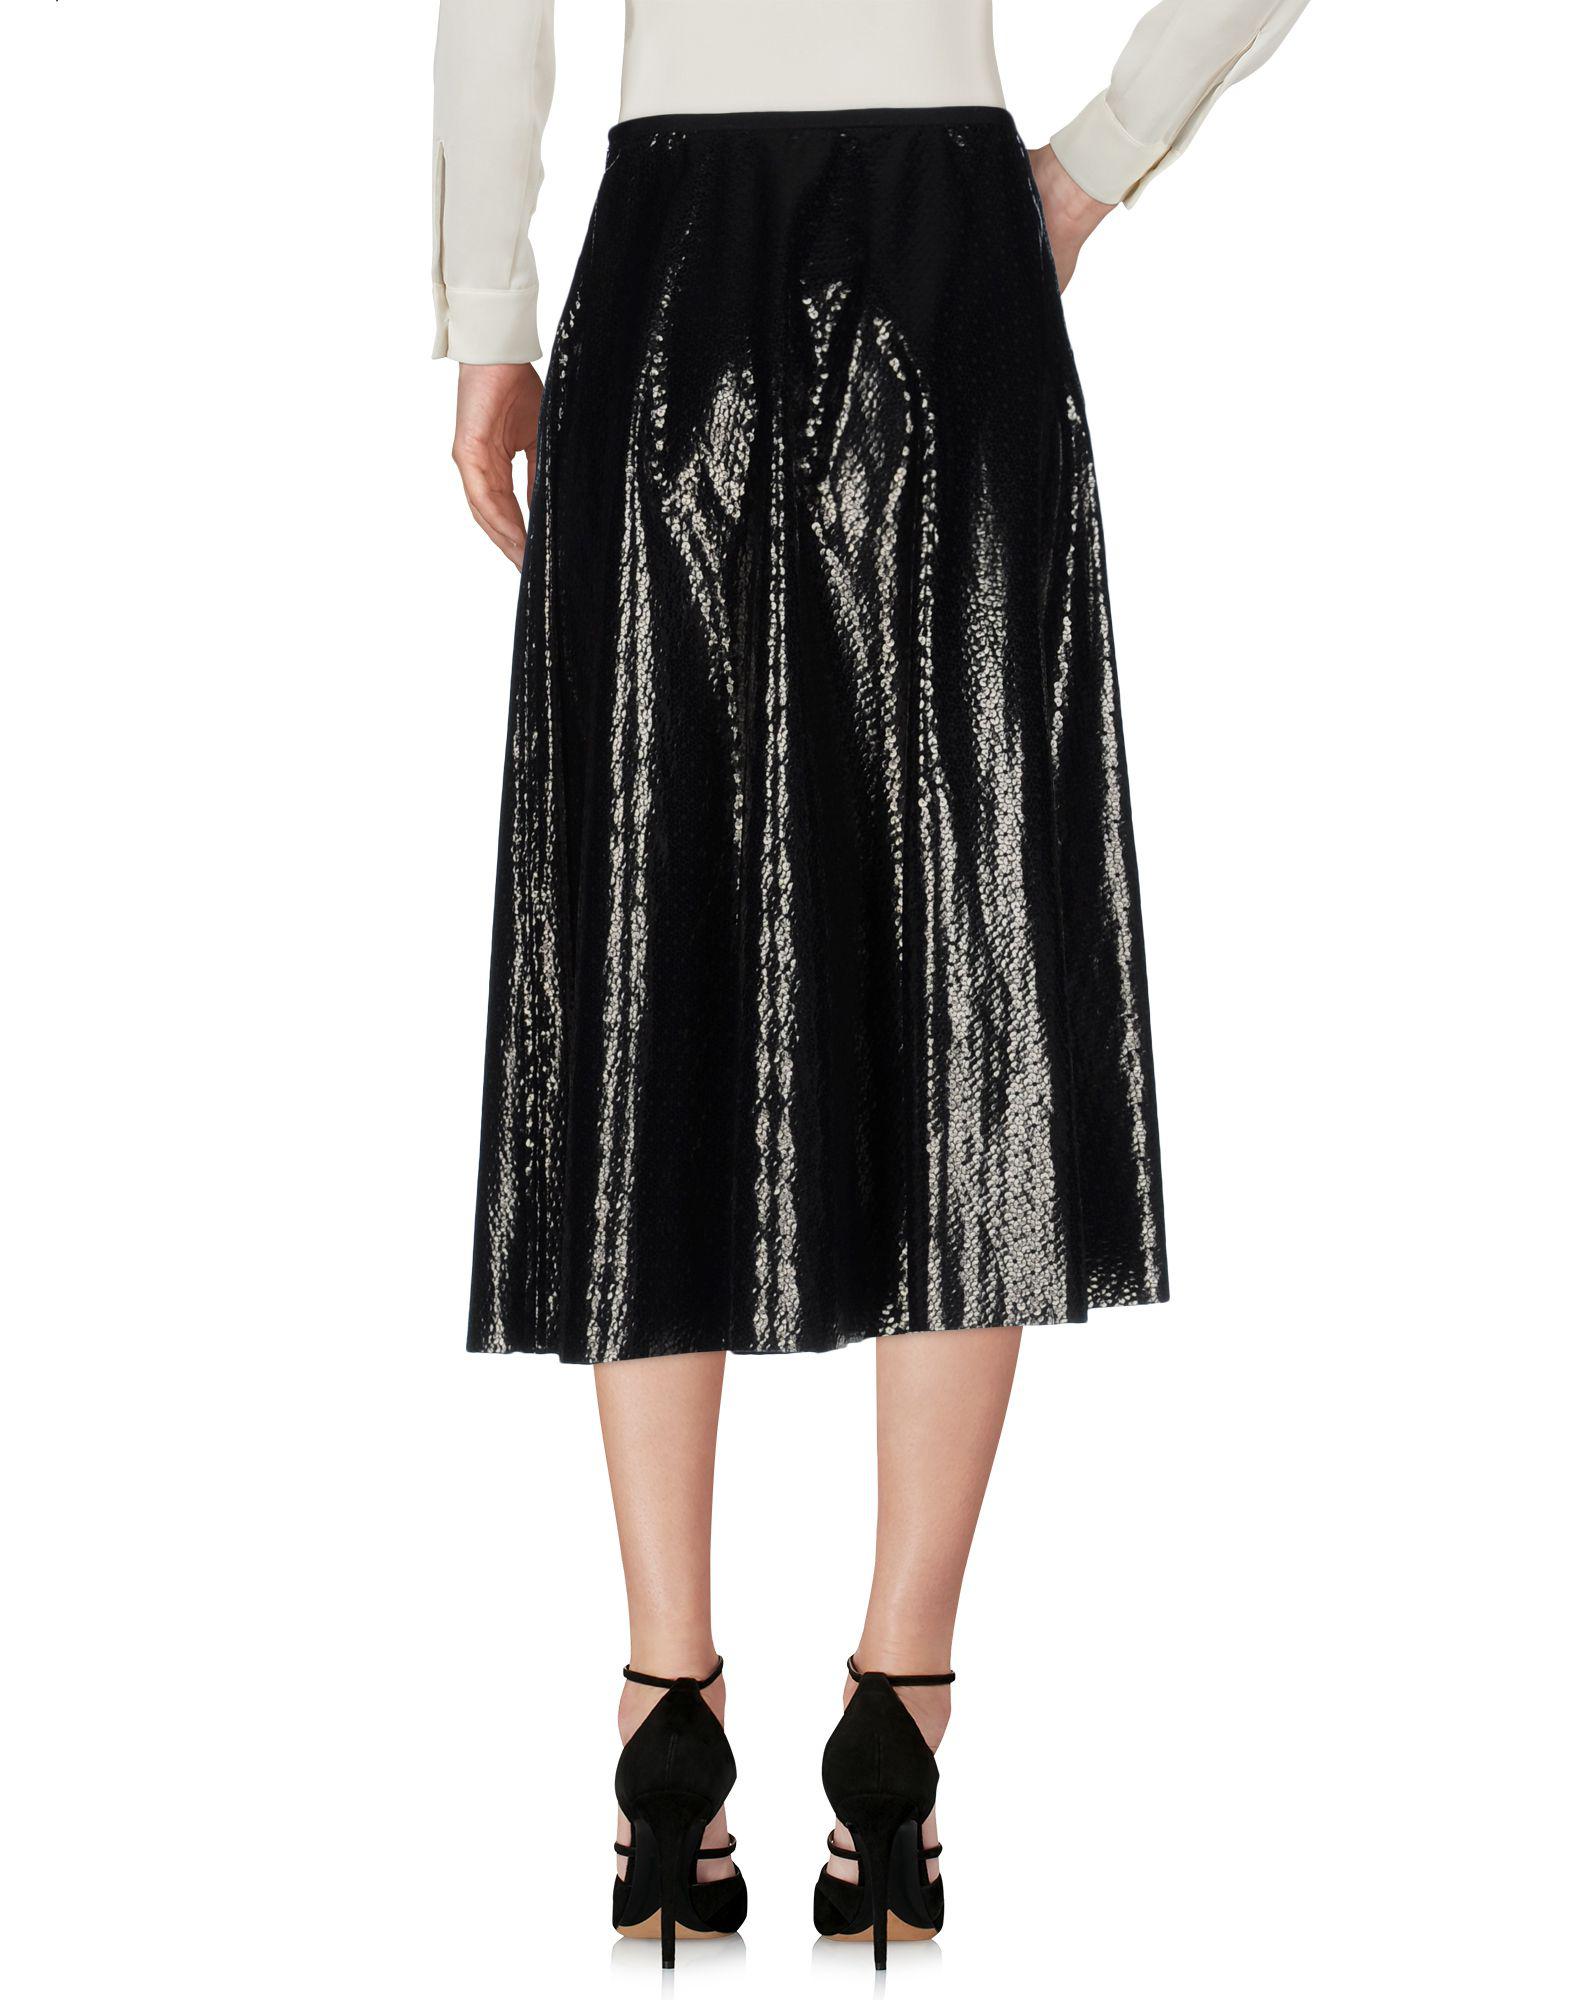 Golden Goose Deluxe Brand Synthetic 3/4 Length Skirt in Black - Lyst